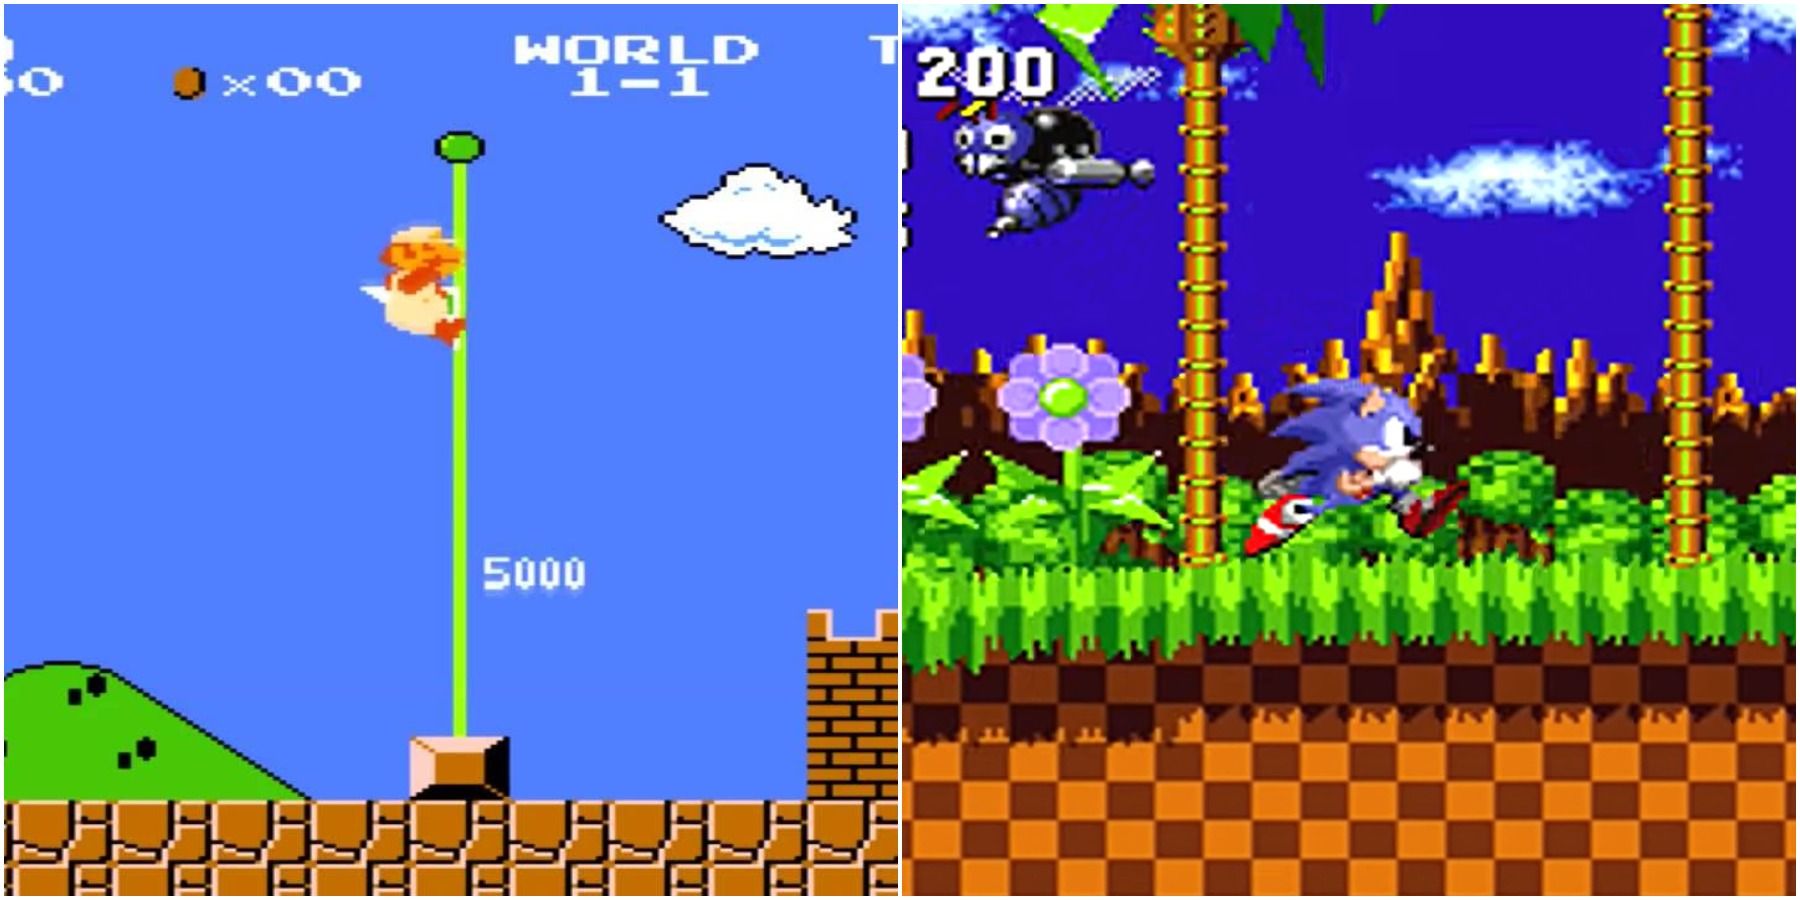 (Left) Mario on a flag (Right) Sonic running